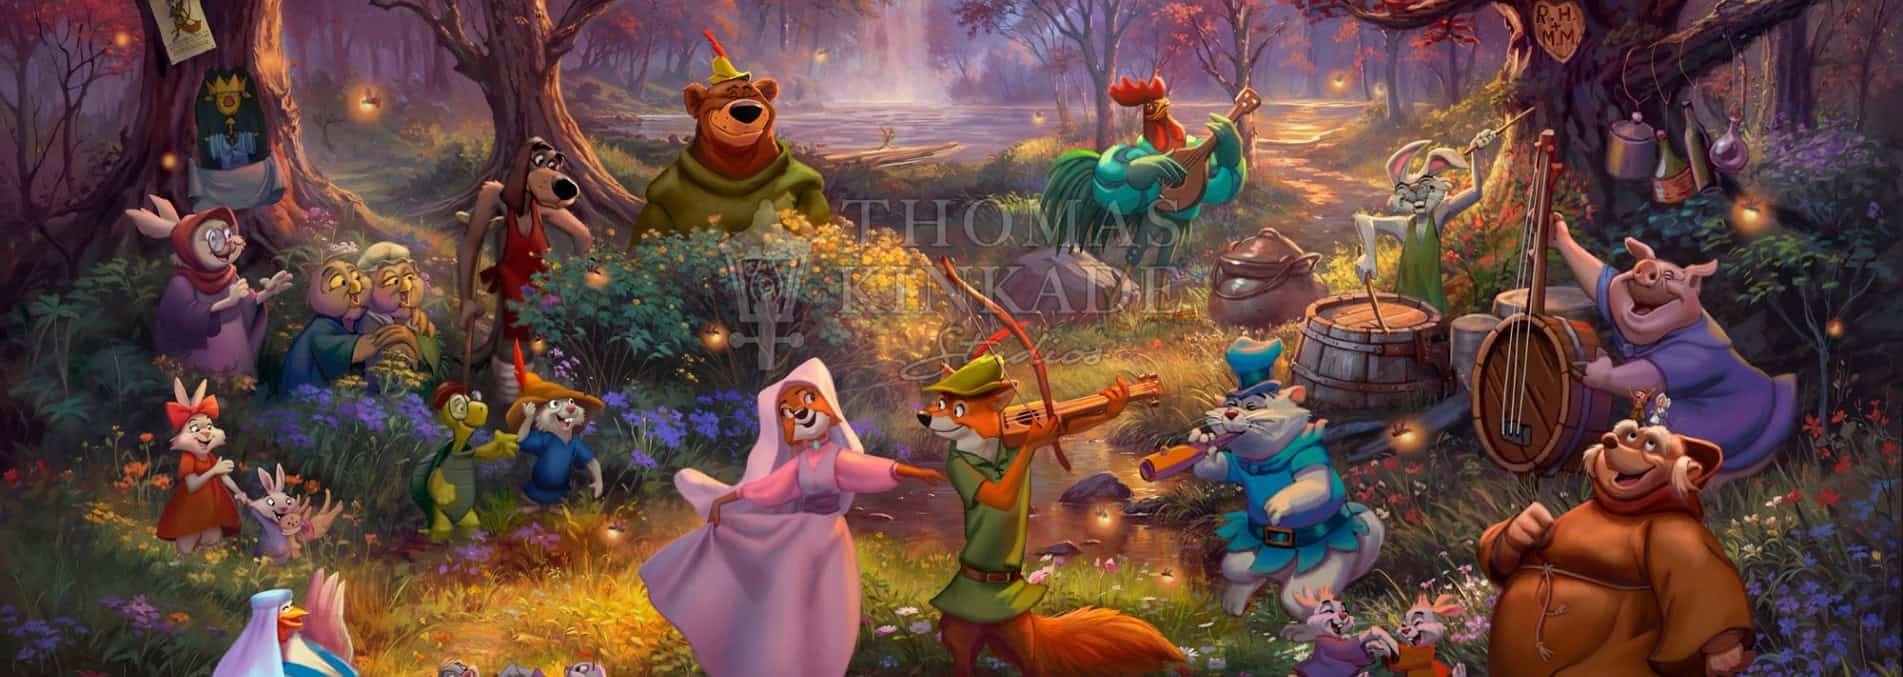 Disney Robin Hood Painting